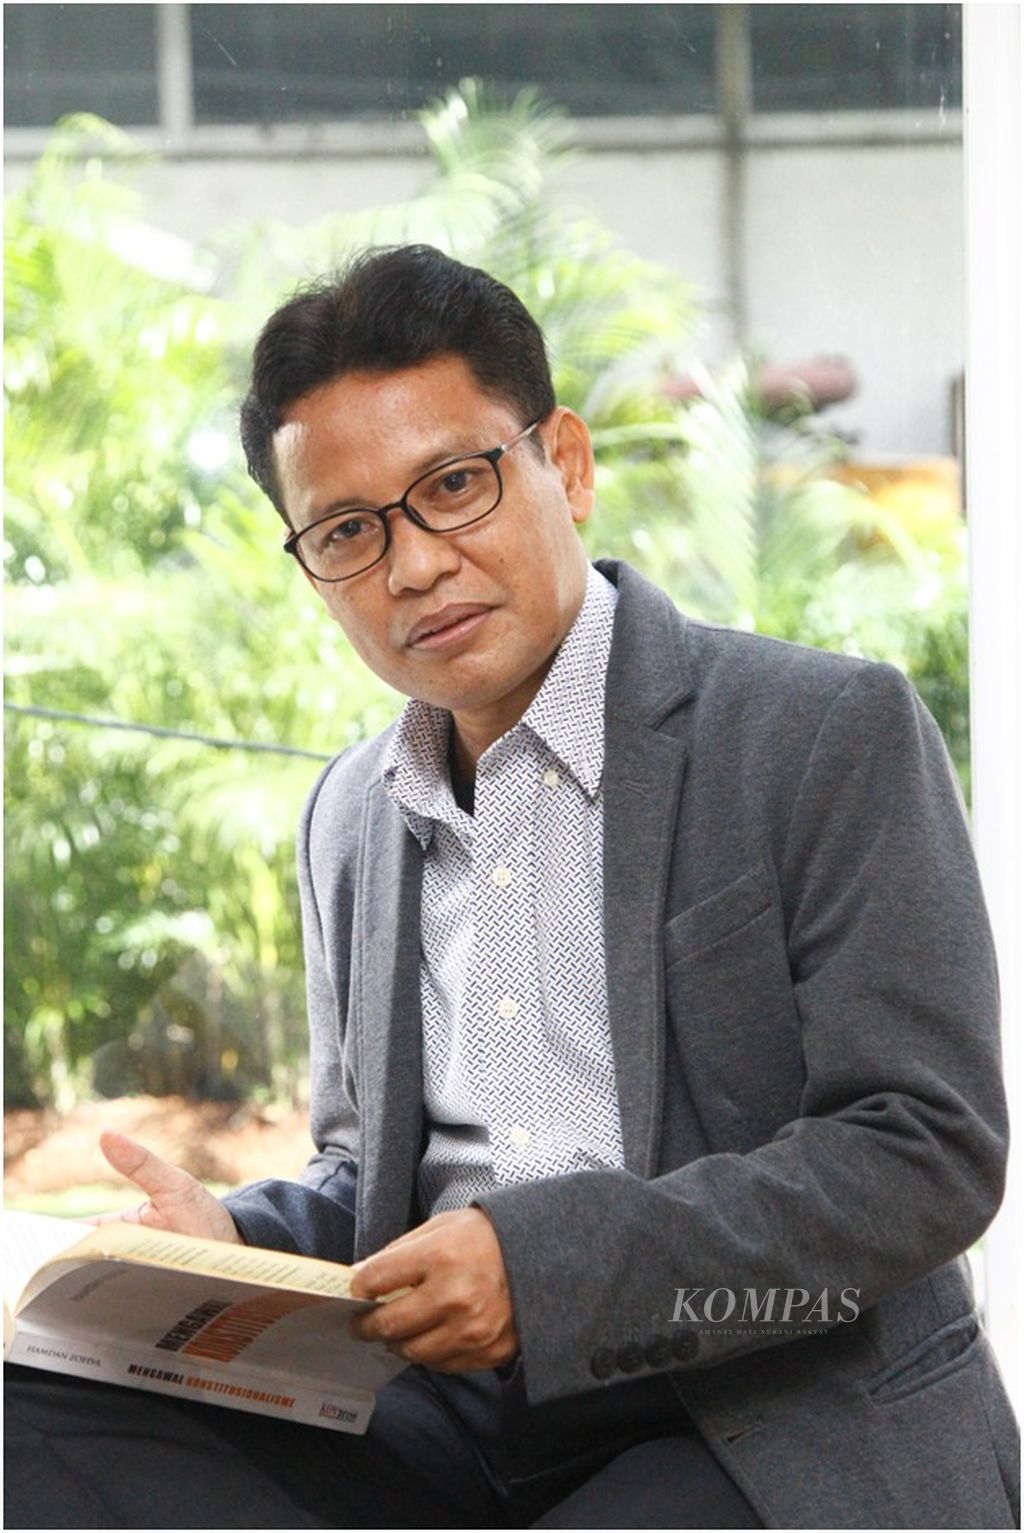 Anggota DPD dari Jawa Tengah Abdul Kholik